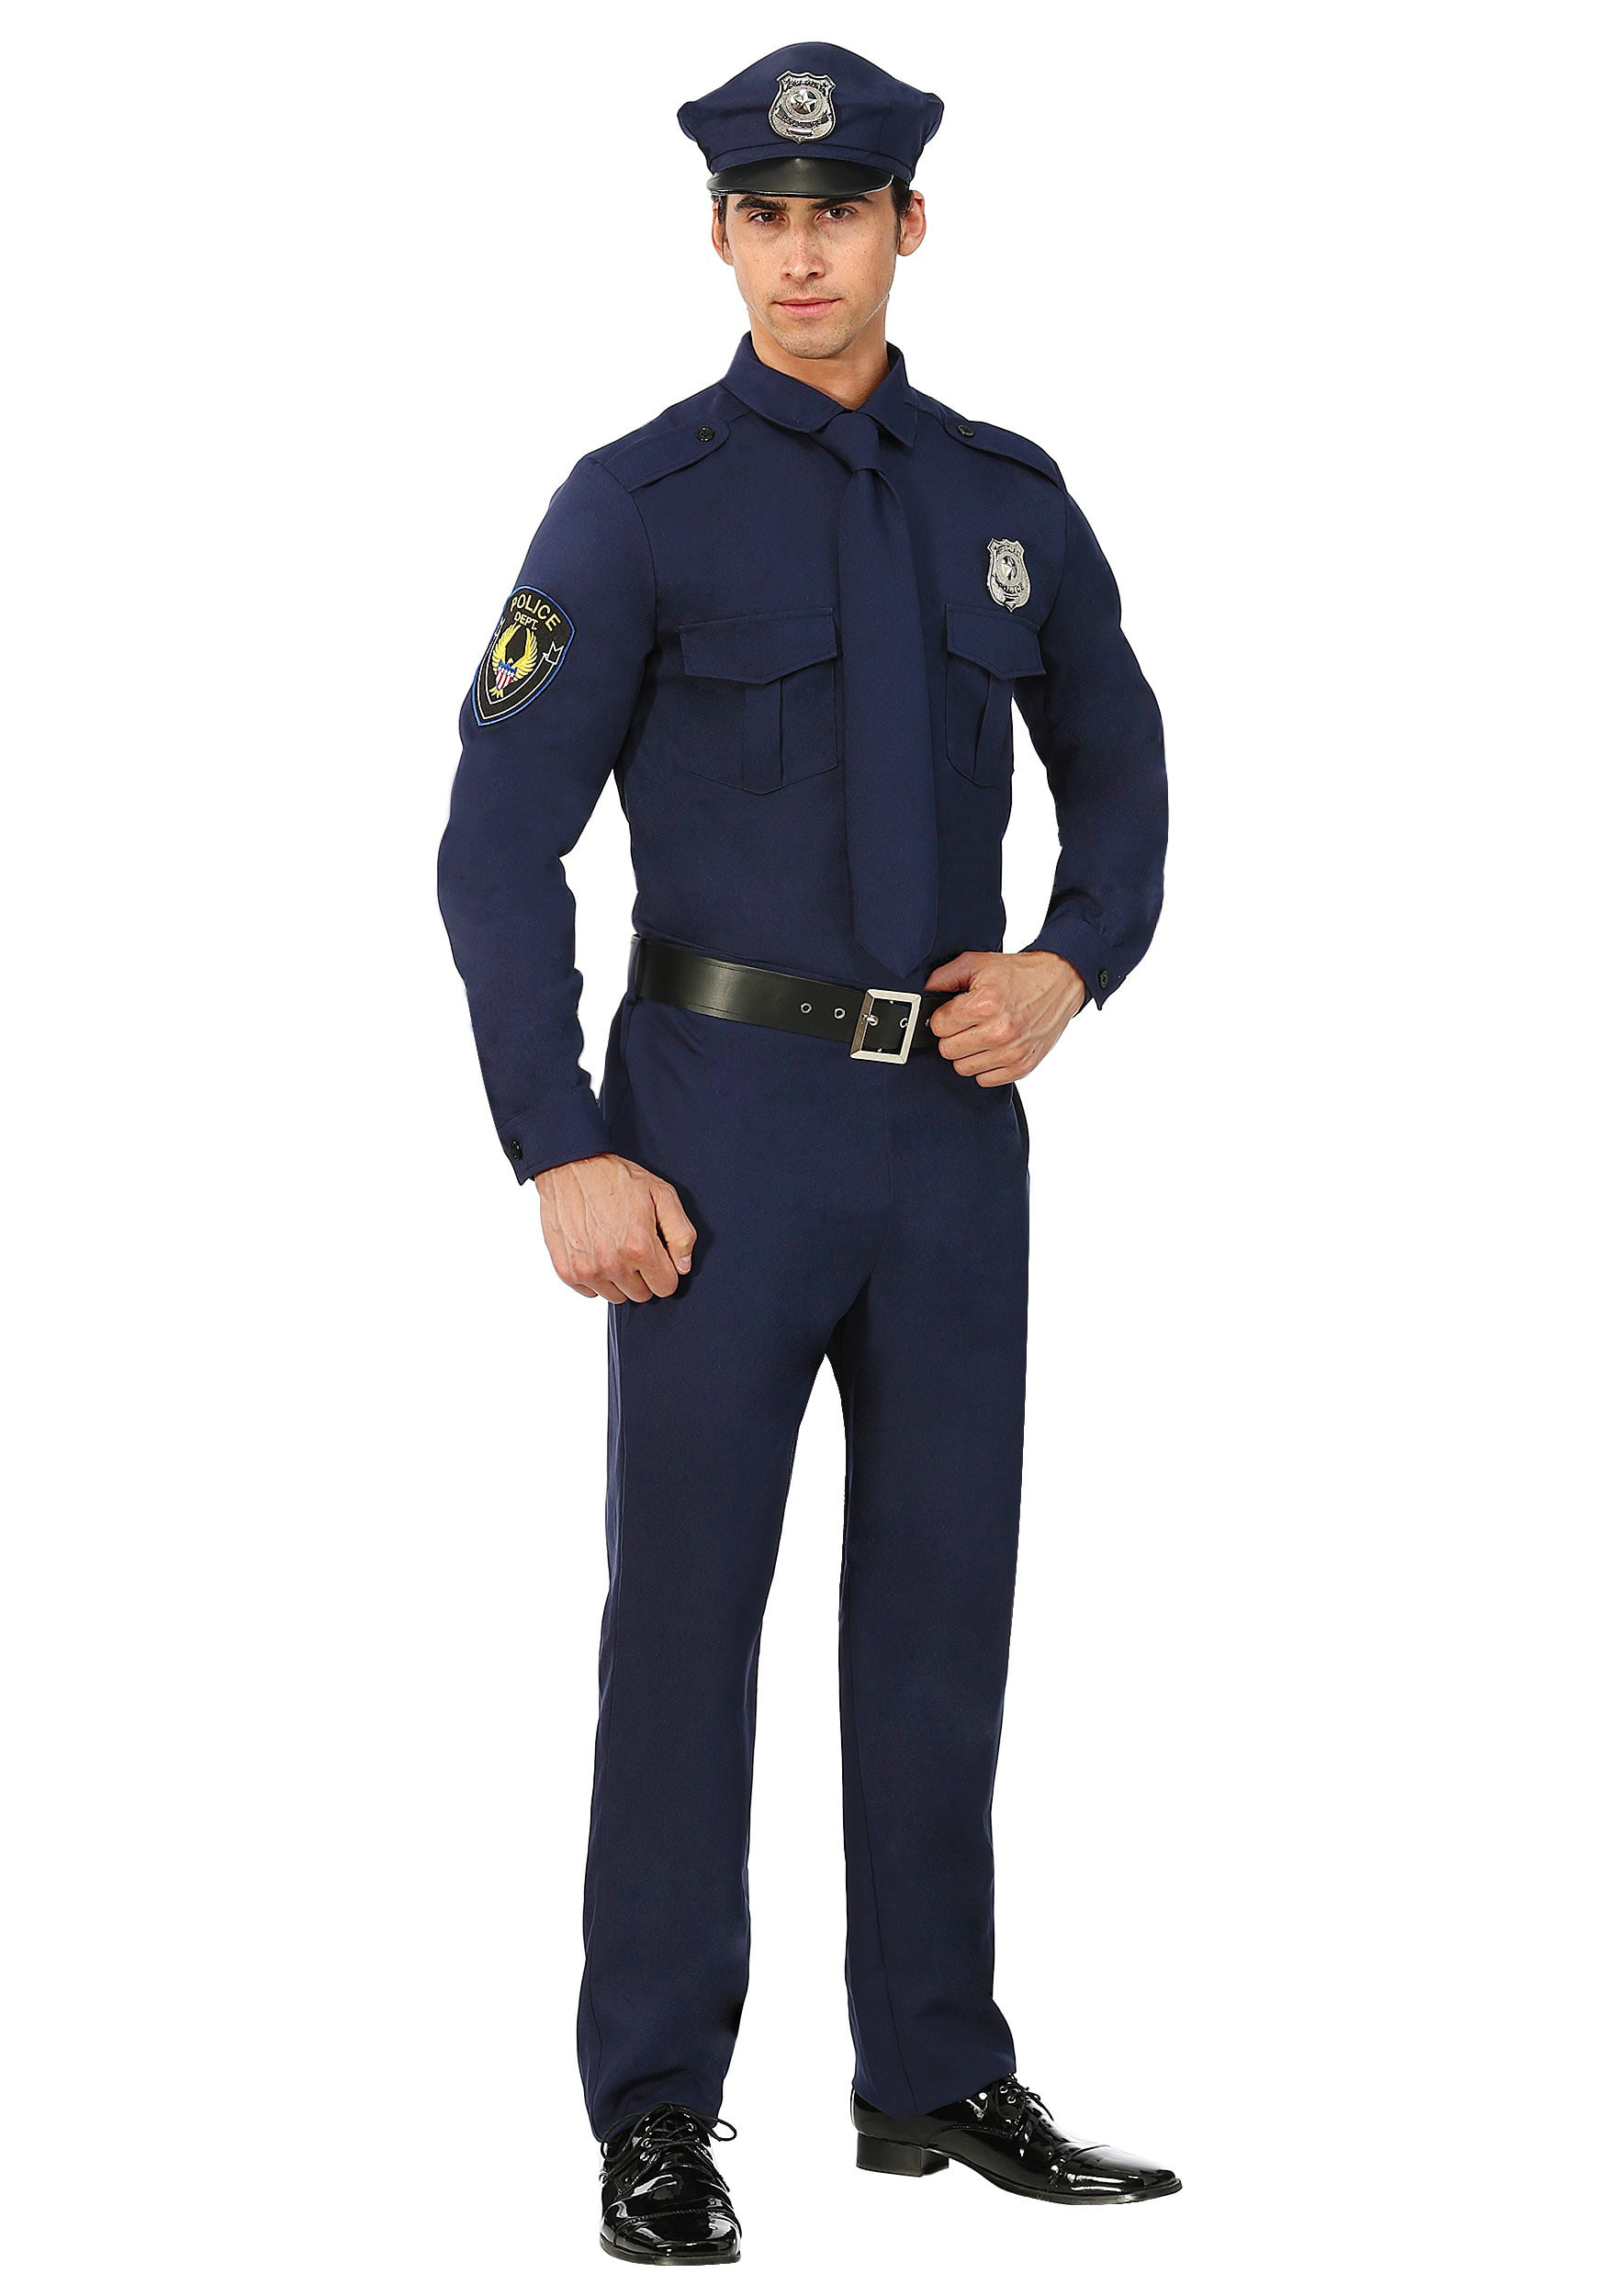 Mens Police Costume Cop Officer Fancy Uniform Costume Fancy Dress M L XL 